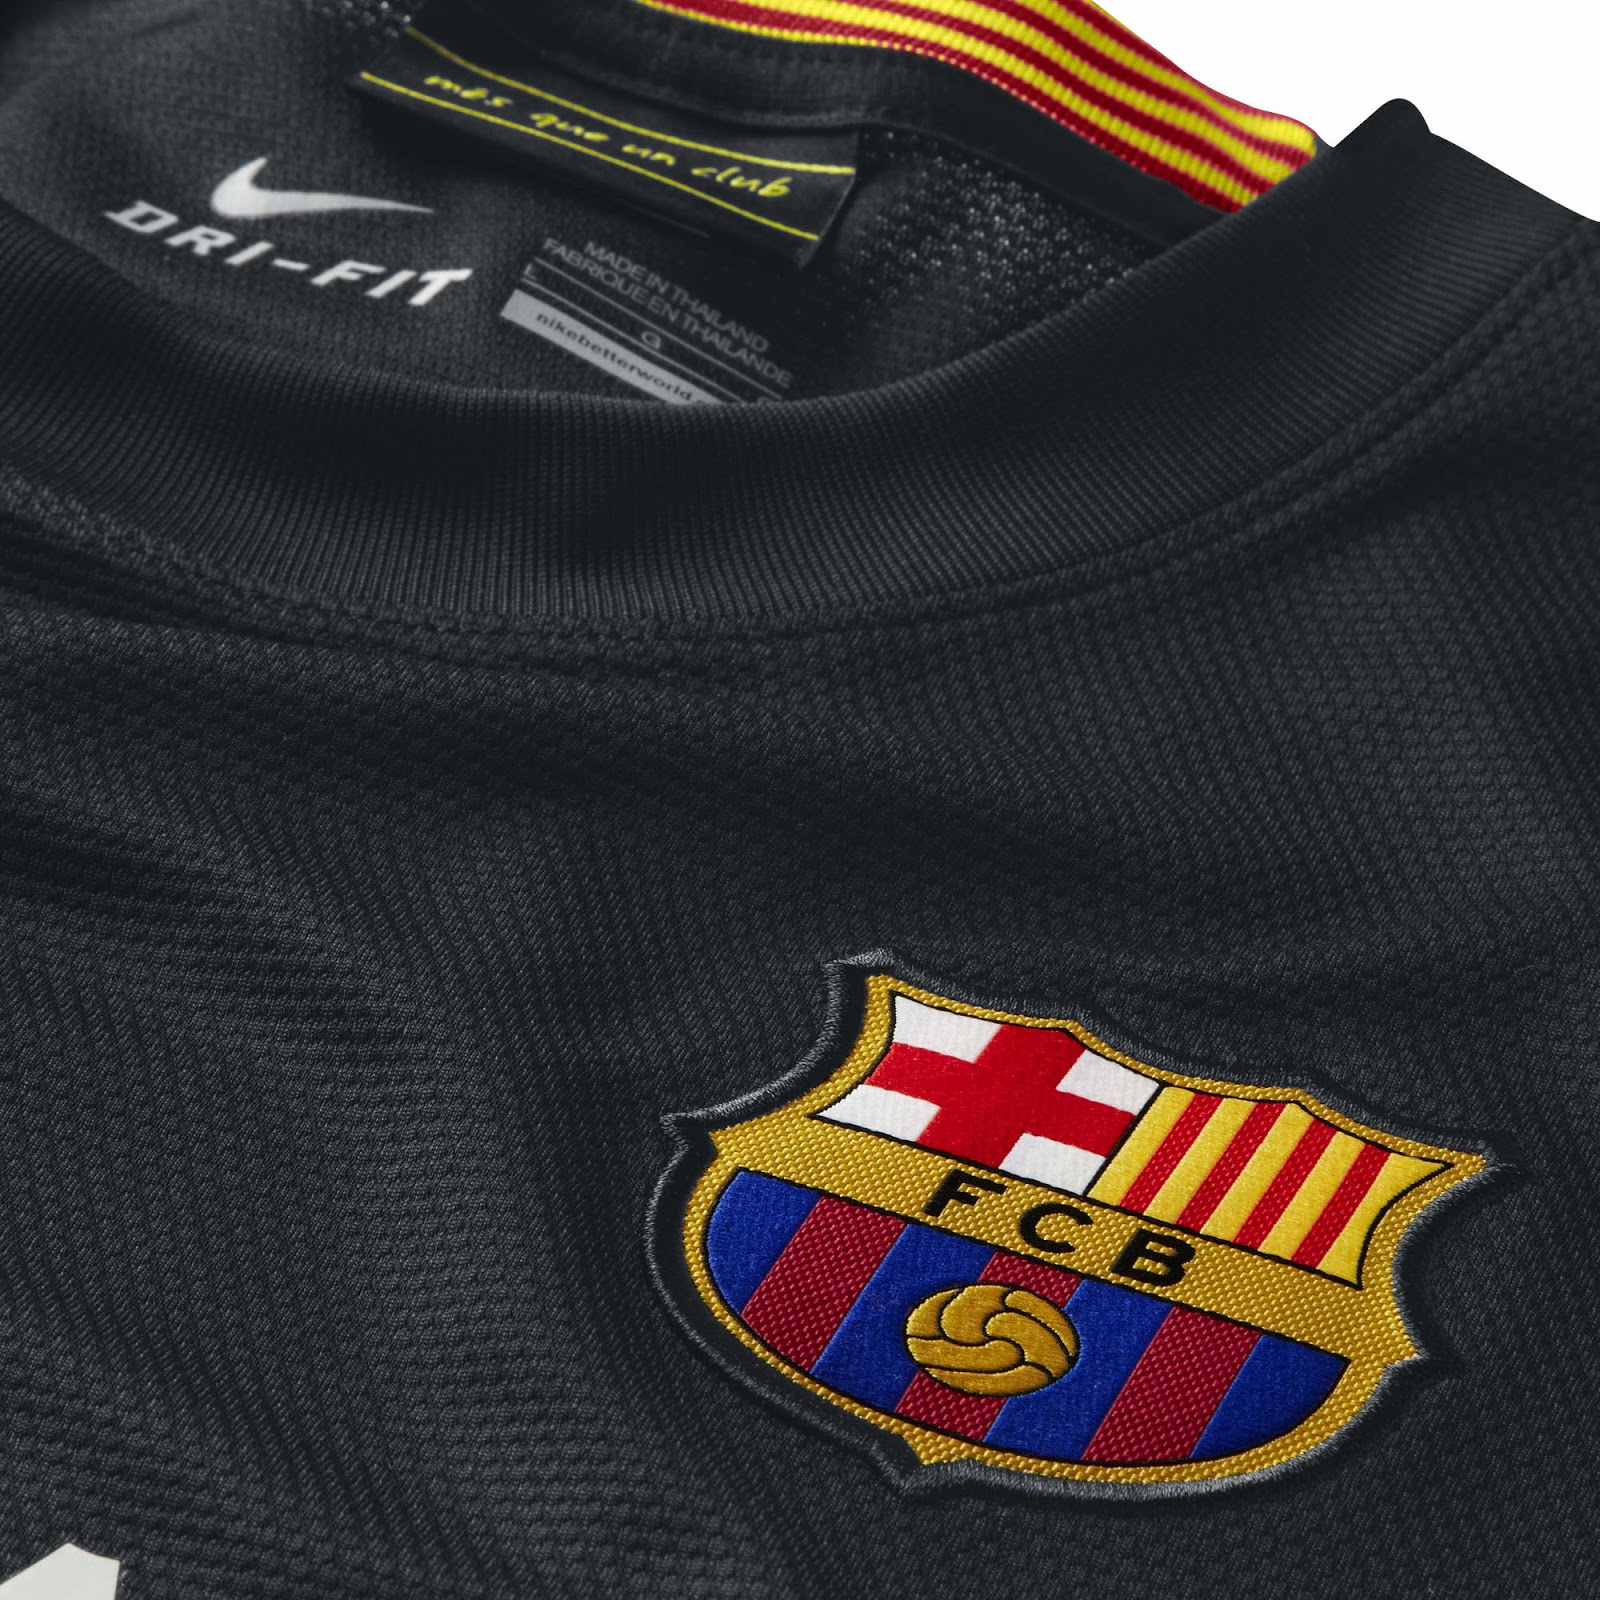 Nike FC Barcelona 13-14 Third Kit Released - Footy Headlines